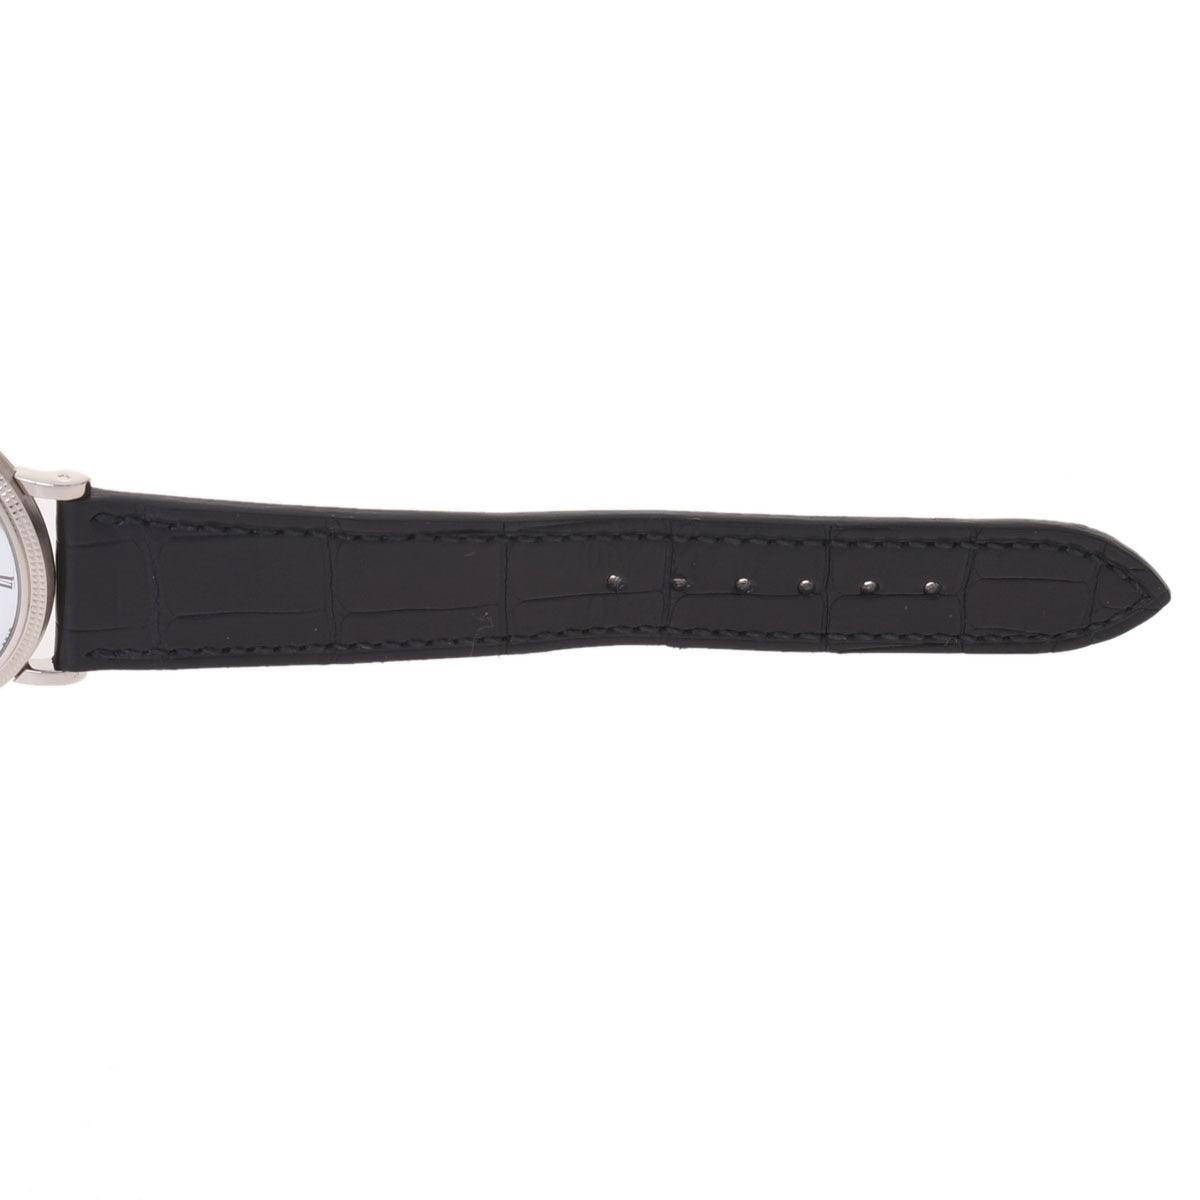 Patek Philippe Calatrava 5119G-001 Men's WG/Leather Watch Manual Winding White Dial A Rank Used Ginzo - Murphy Johnson Watches Co.